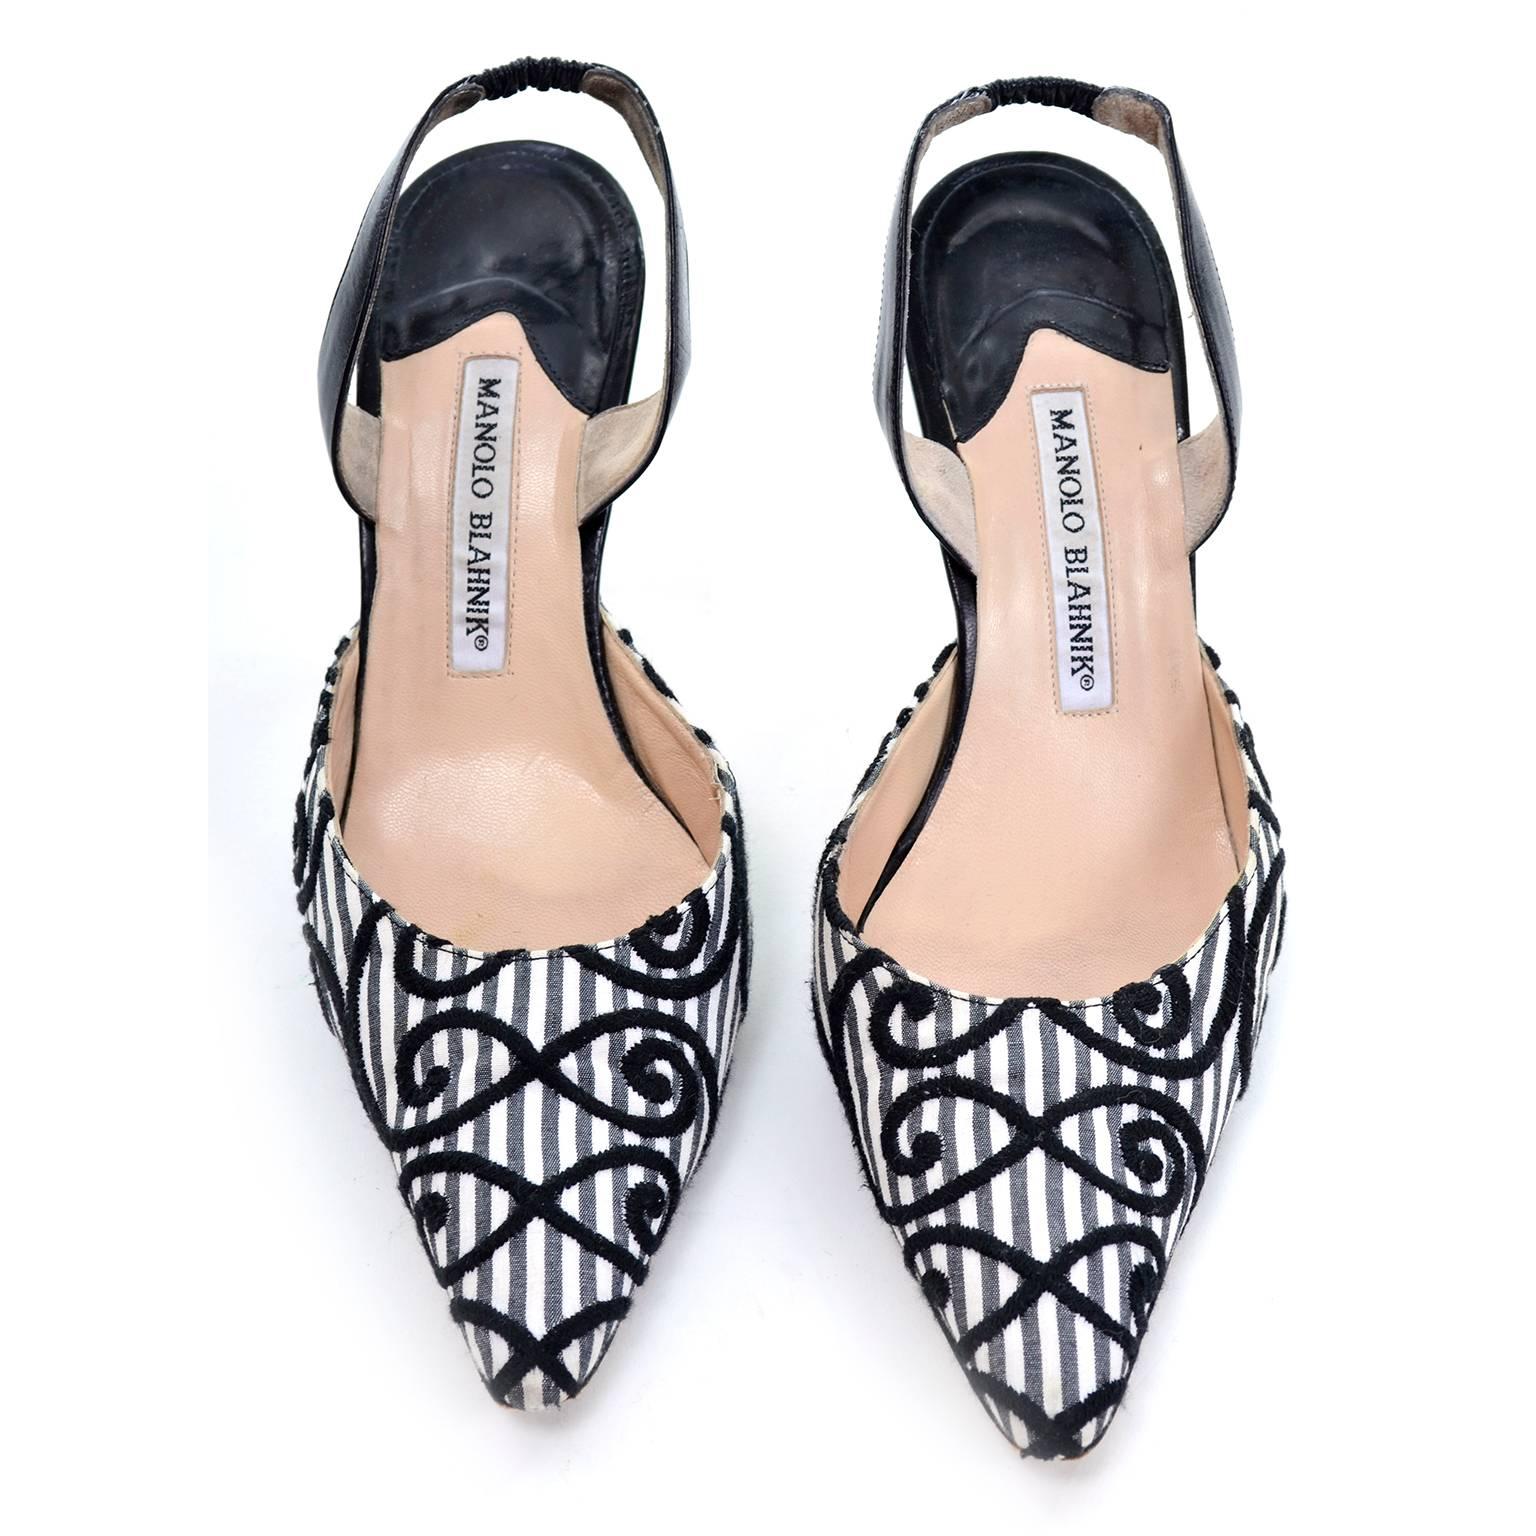 Manolo Blahnik Carolyne Sling Back Shoes in Black and White Swirls Size ...